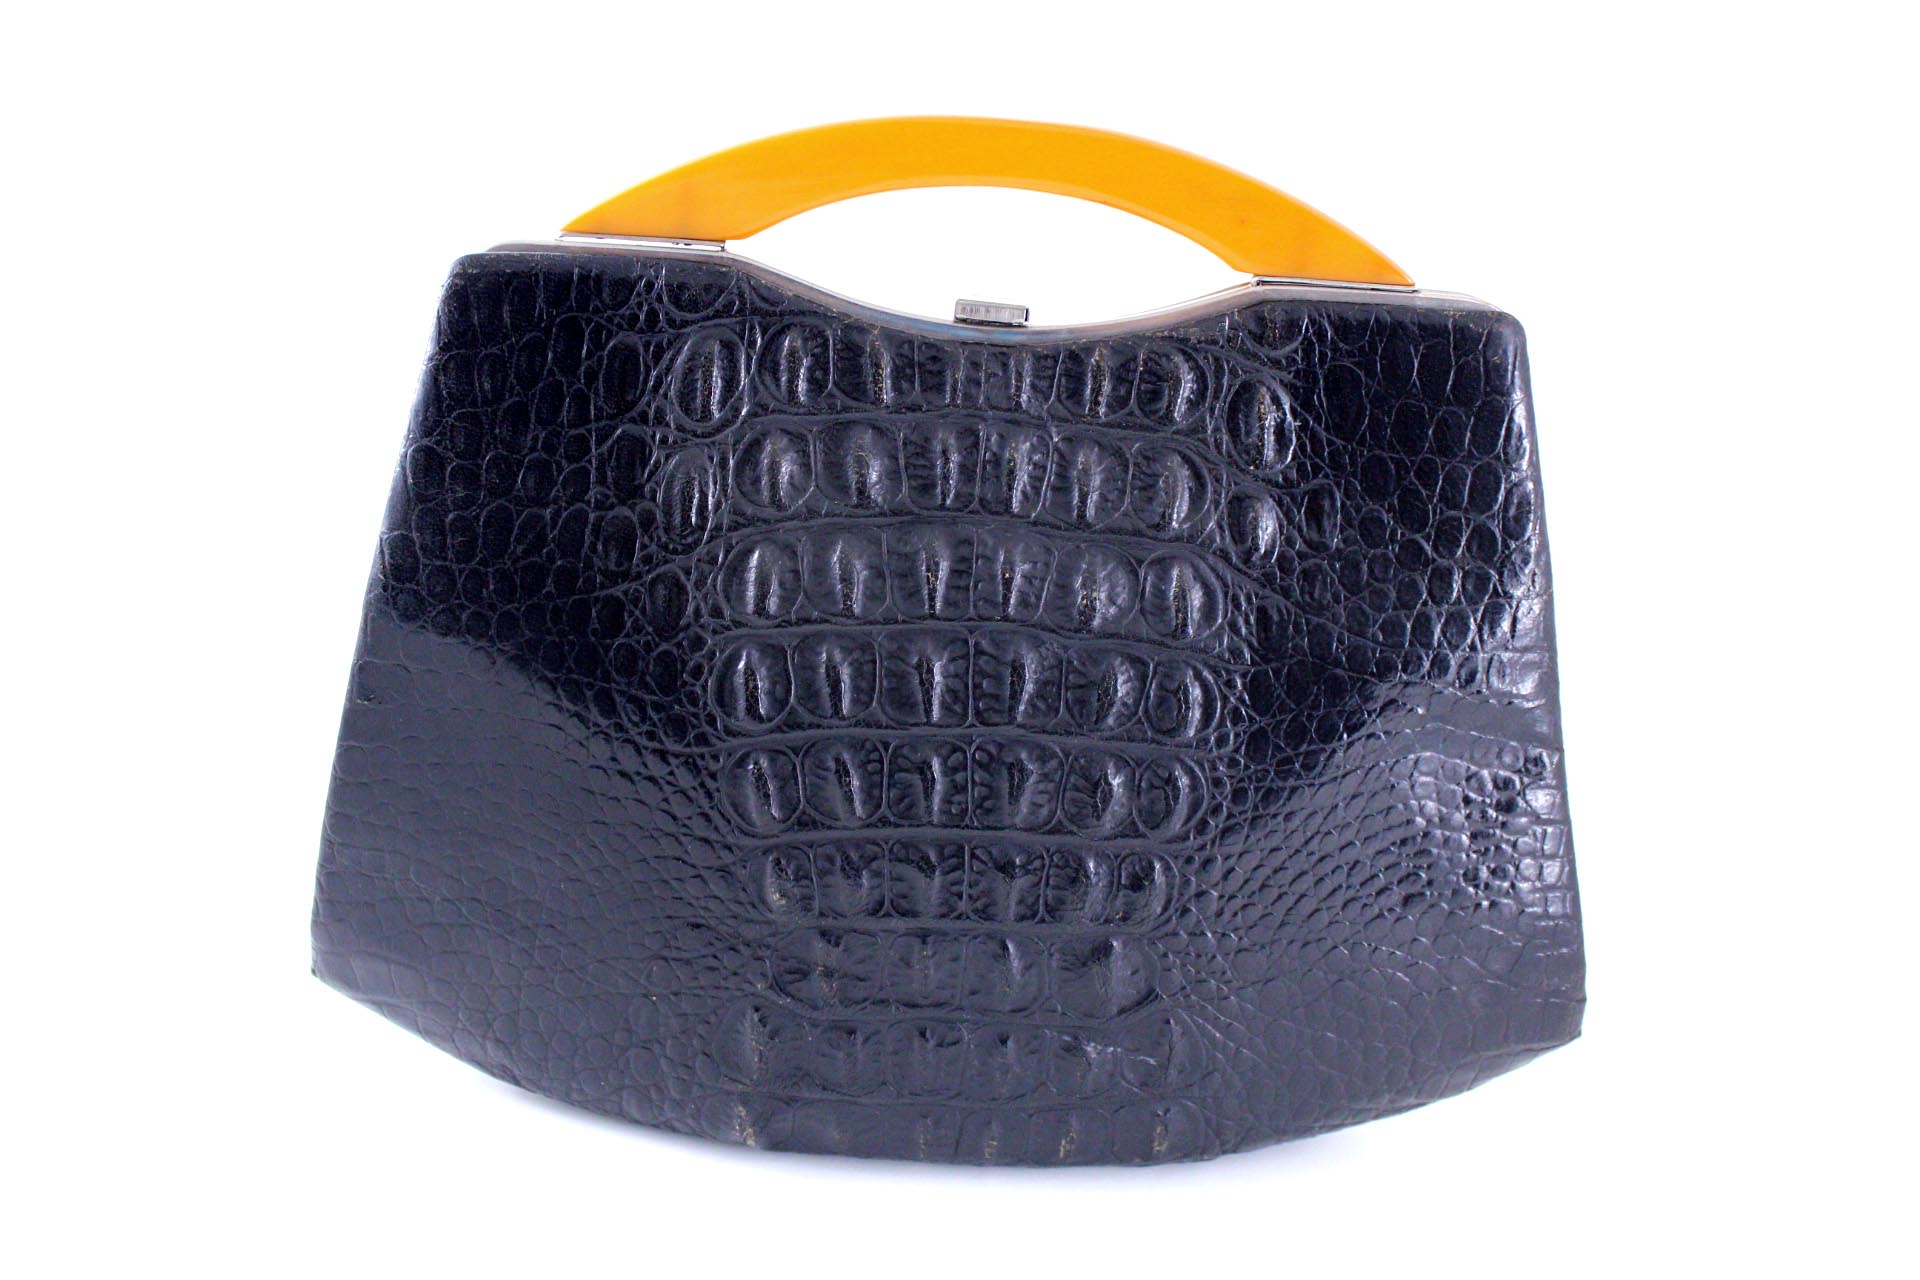 SOLIQUE vintage handbag black patent leather and crocodile leather